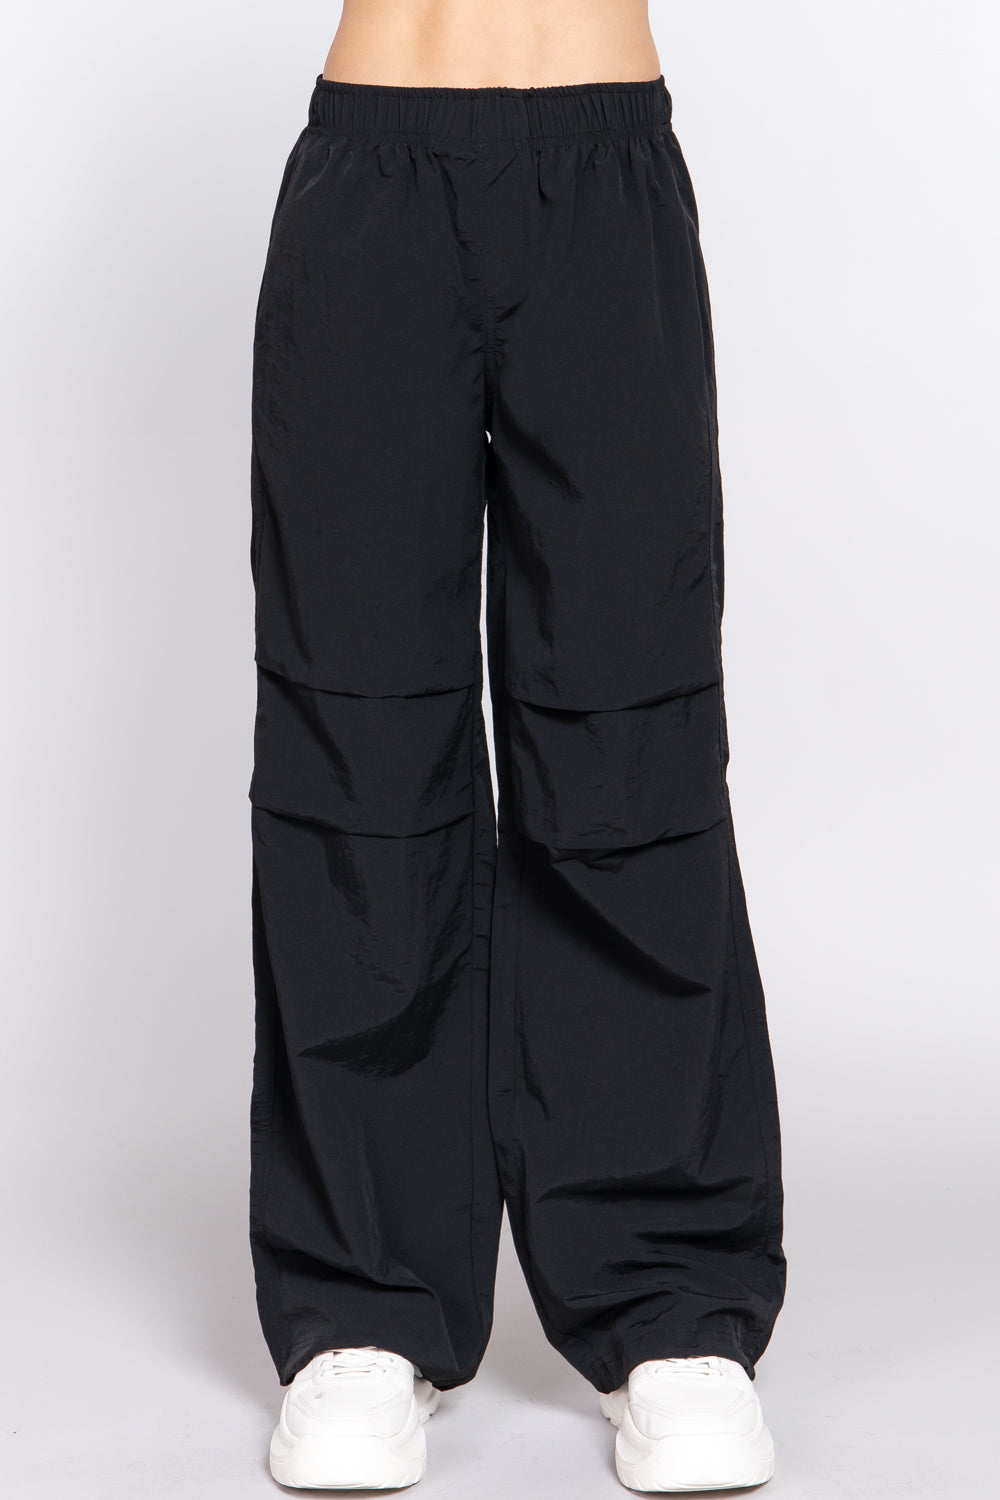 Elastic Waist Pants (3 Colors Available)